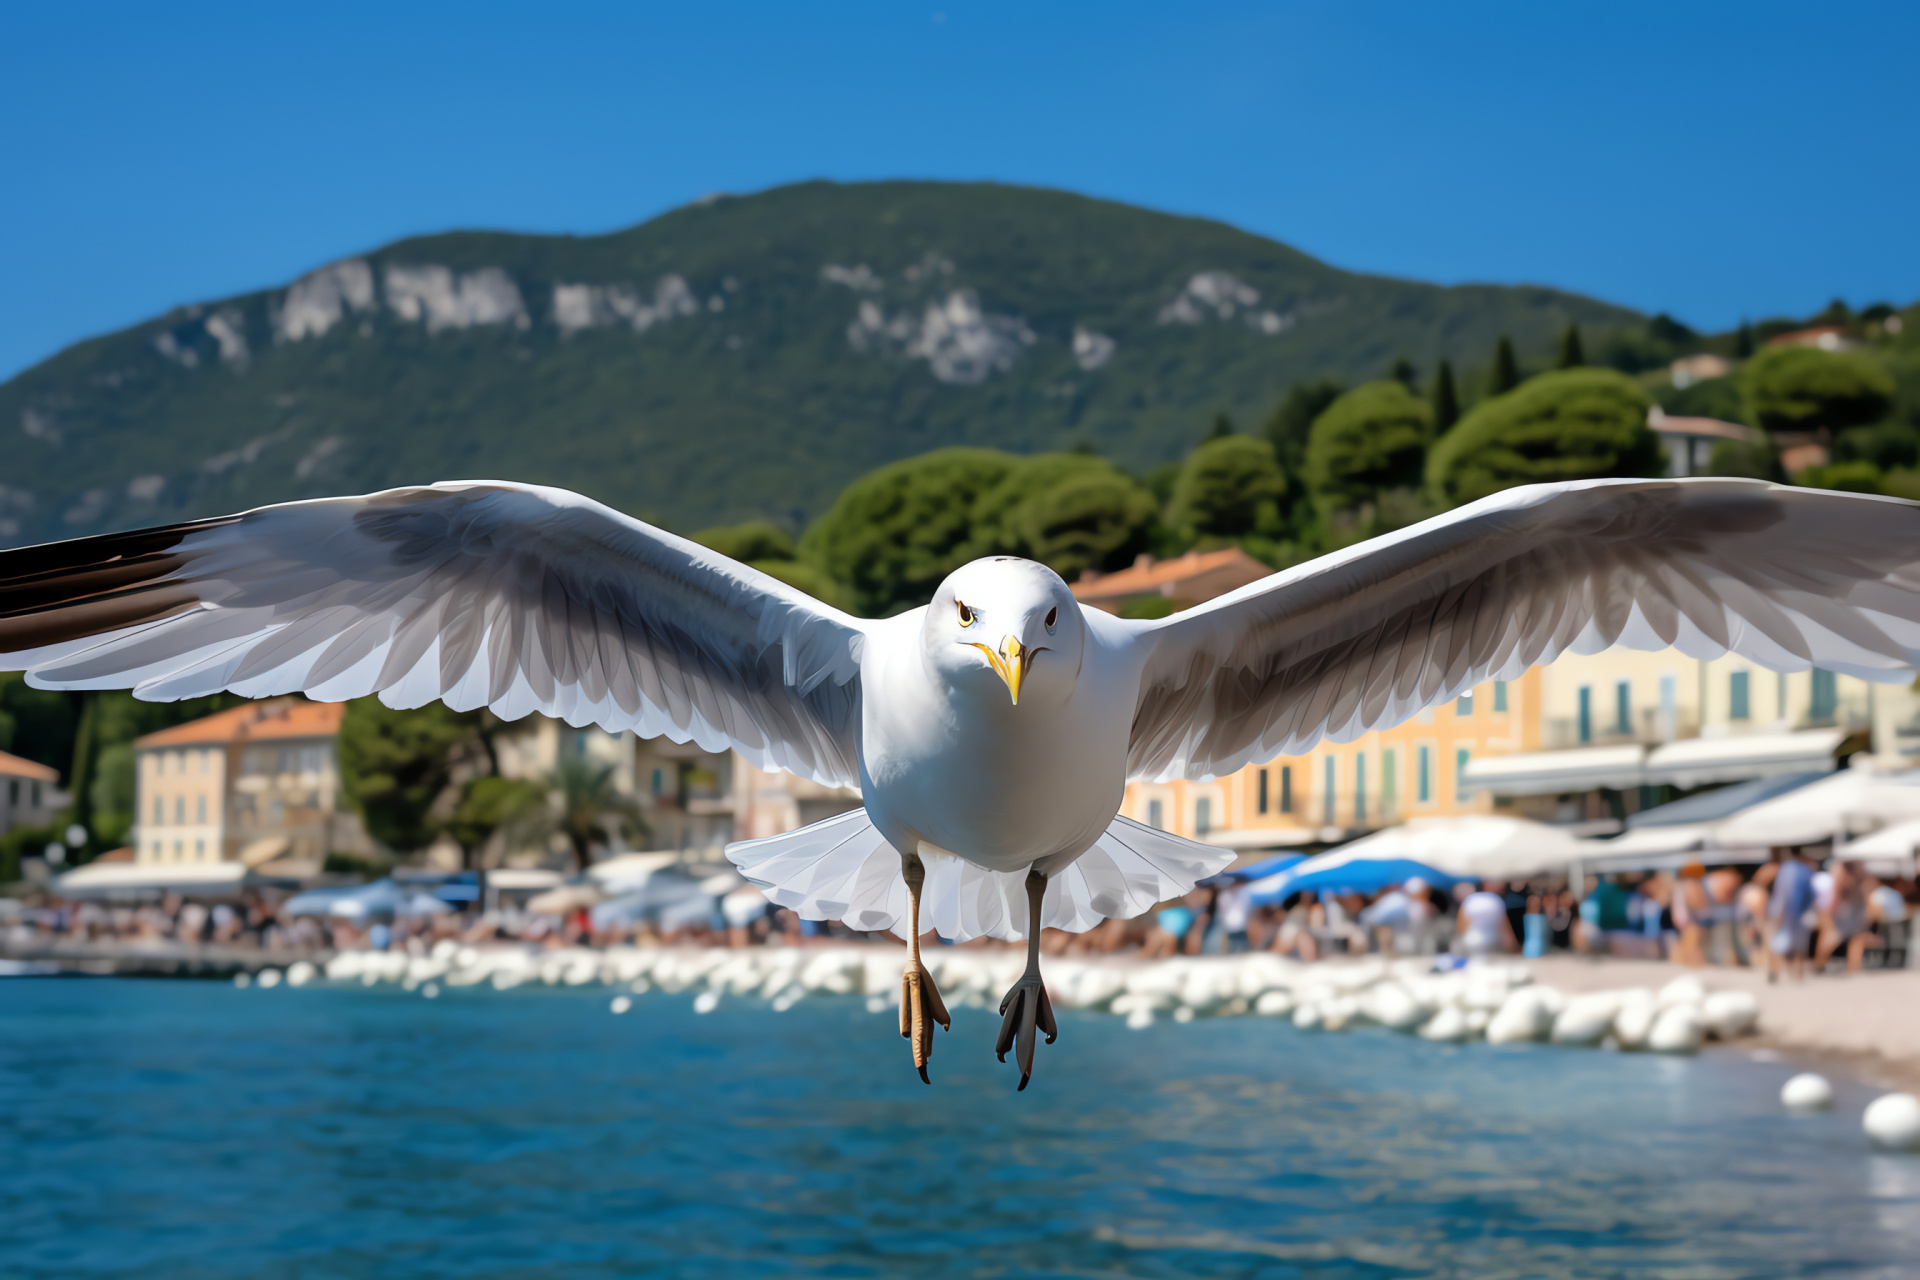 Seagull soaring, coastal birdwatching, seaside avifauna, human interaction in habitat, marine environment, HD Desktop Wallpaper